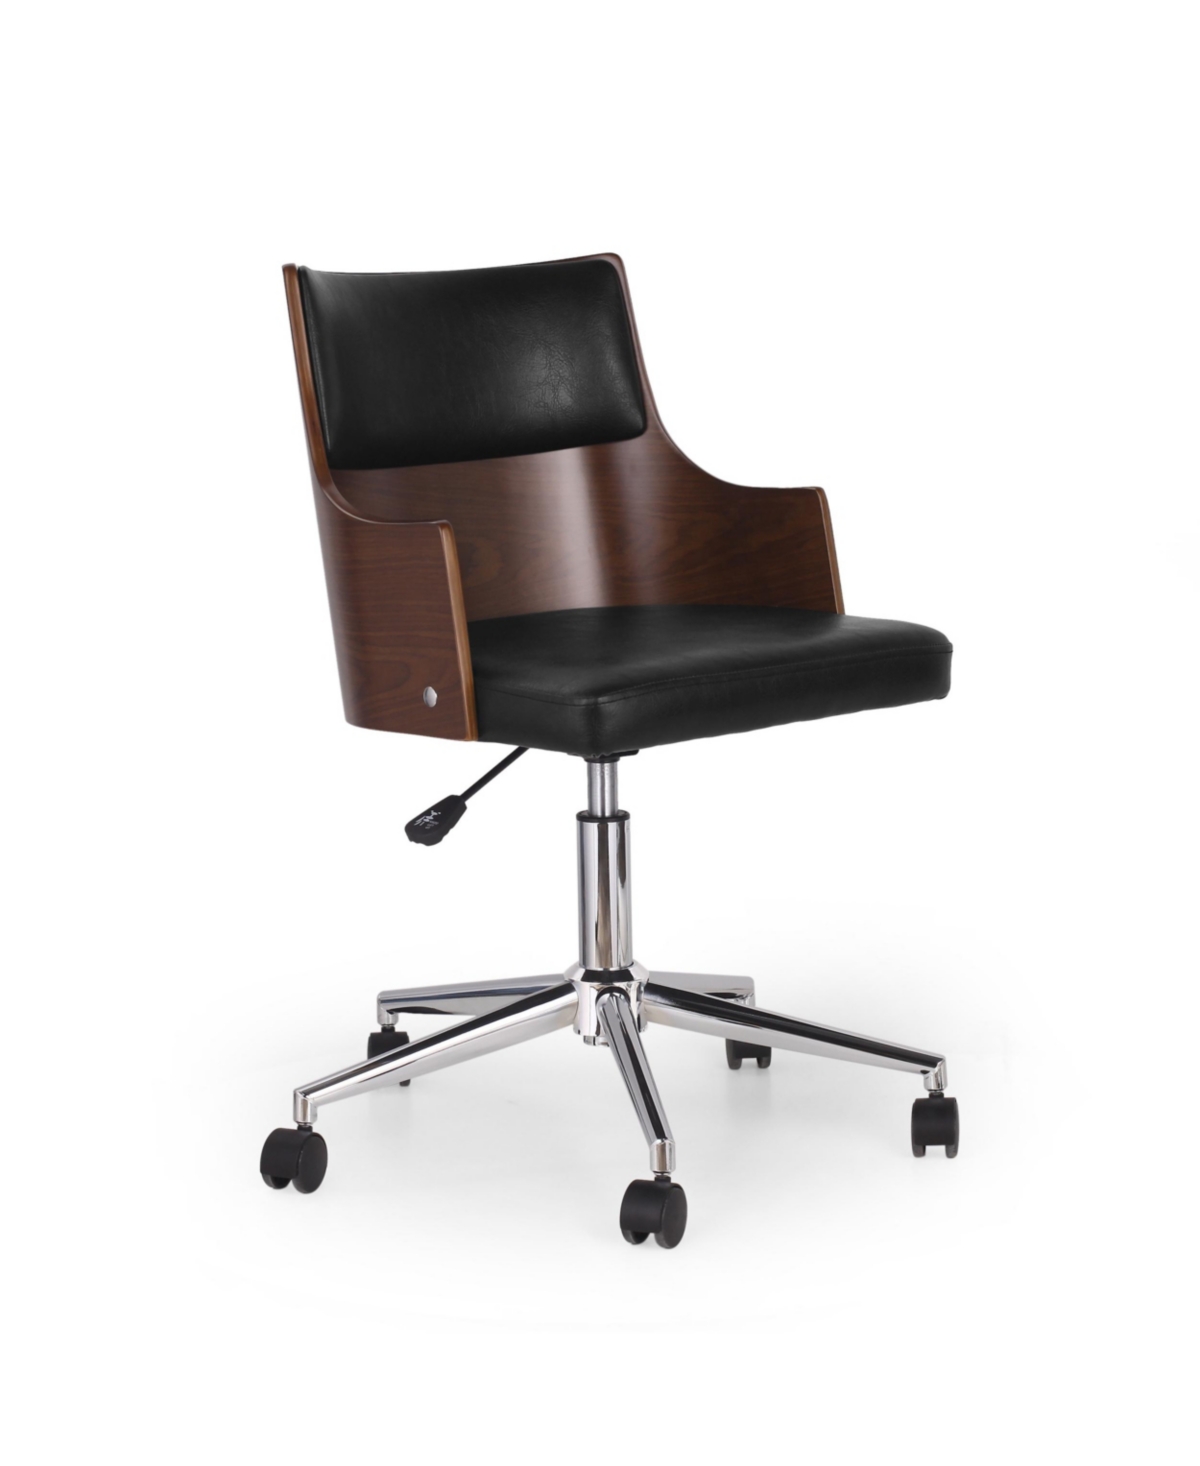 Noble House Rhine Mid-century Modern Upholstered Swivel Office Chair In Black